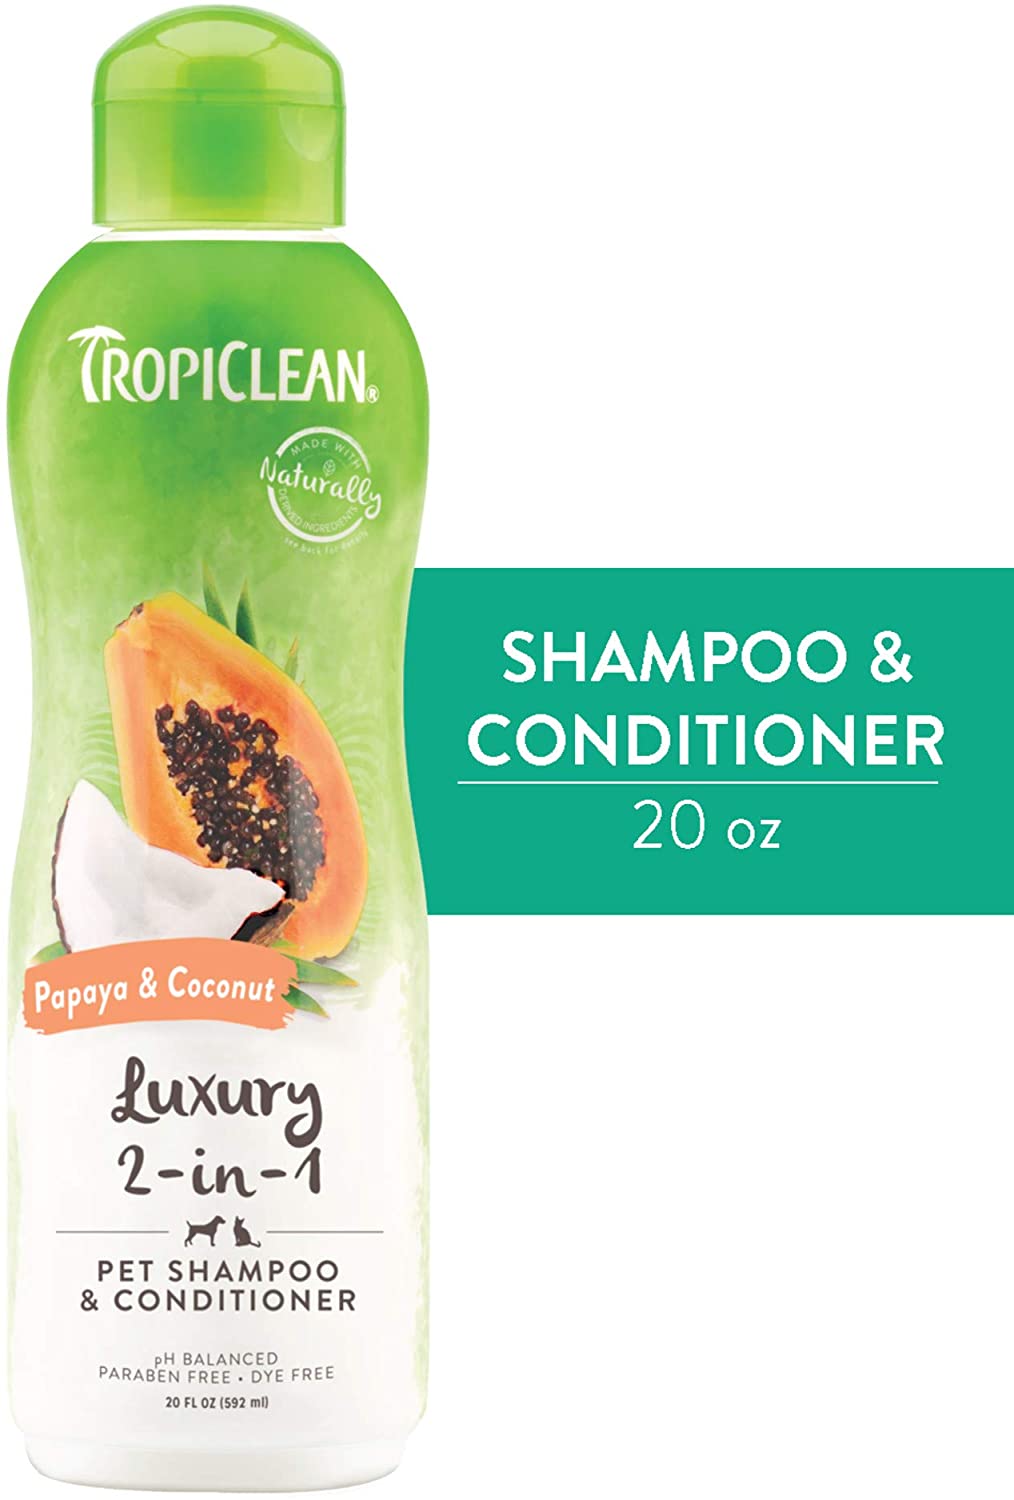 tropiclean dog shampoo